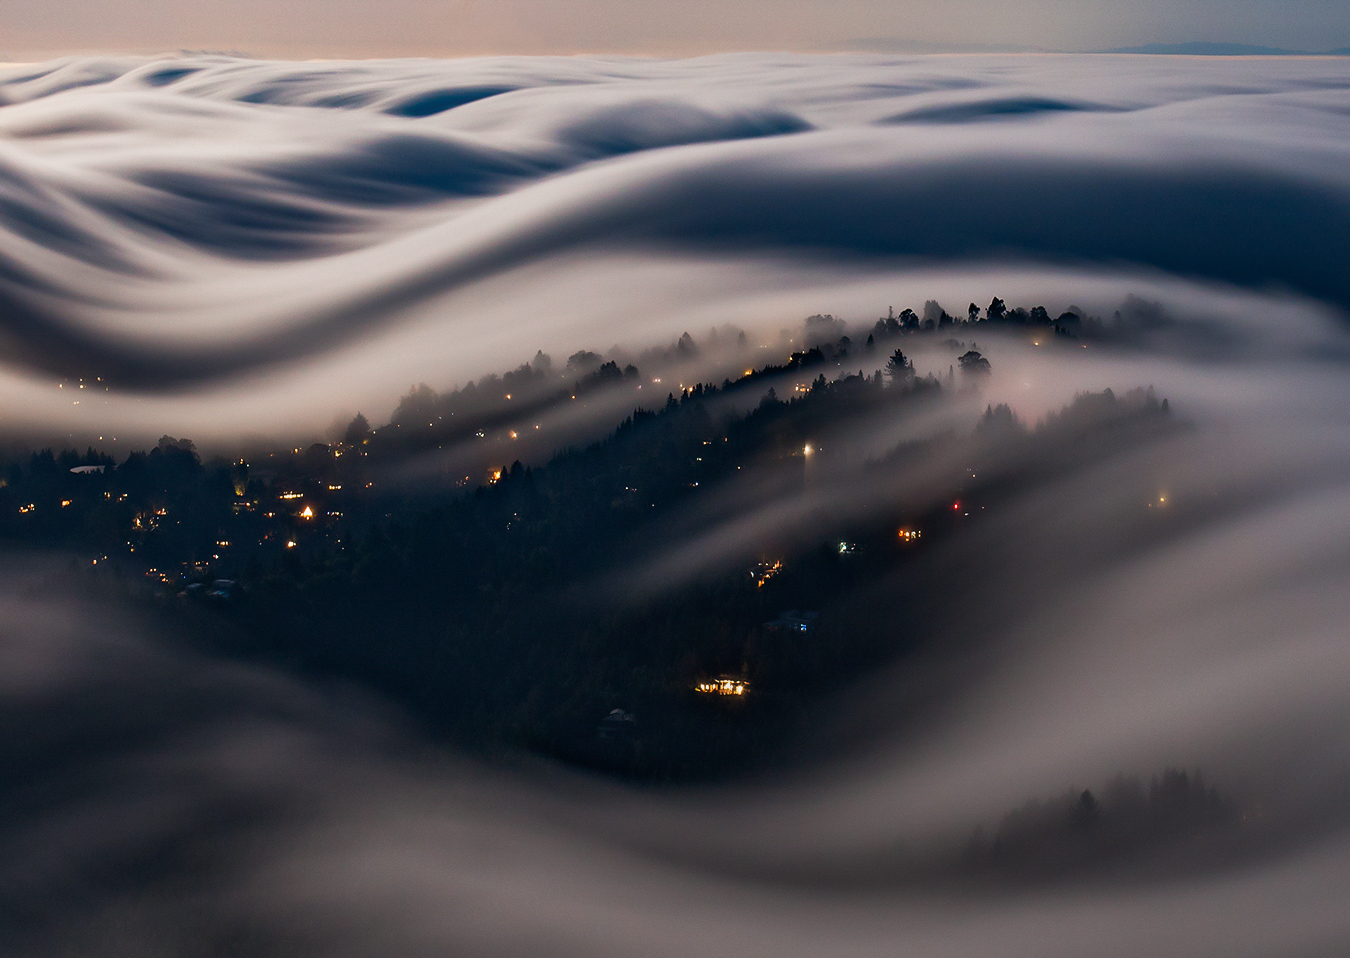 Nicholas Steinberg拍摄旧金山雾浪 气势壮观不逊云海